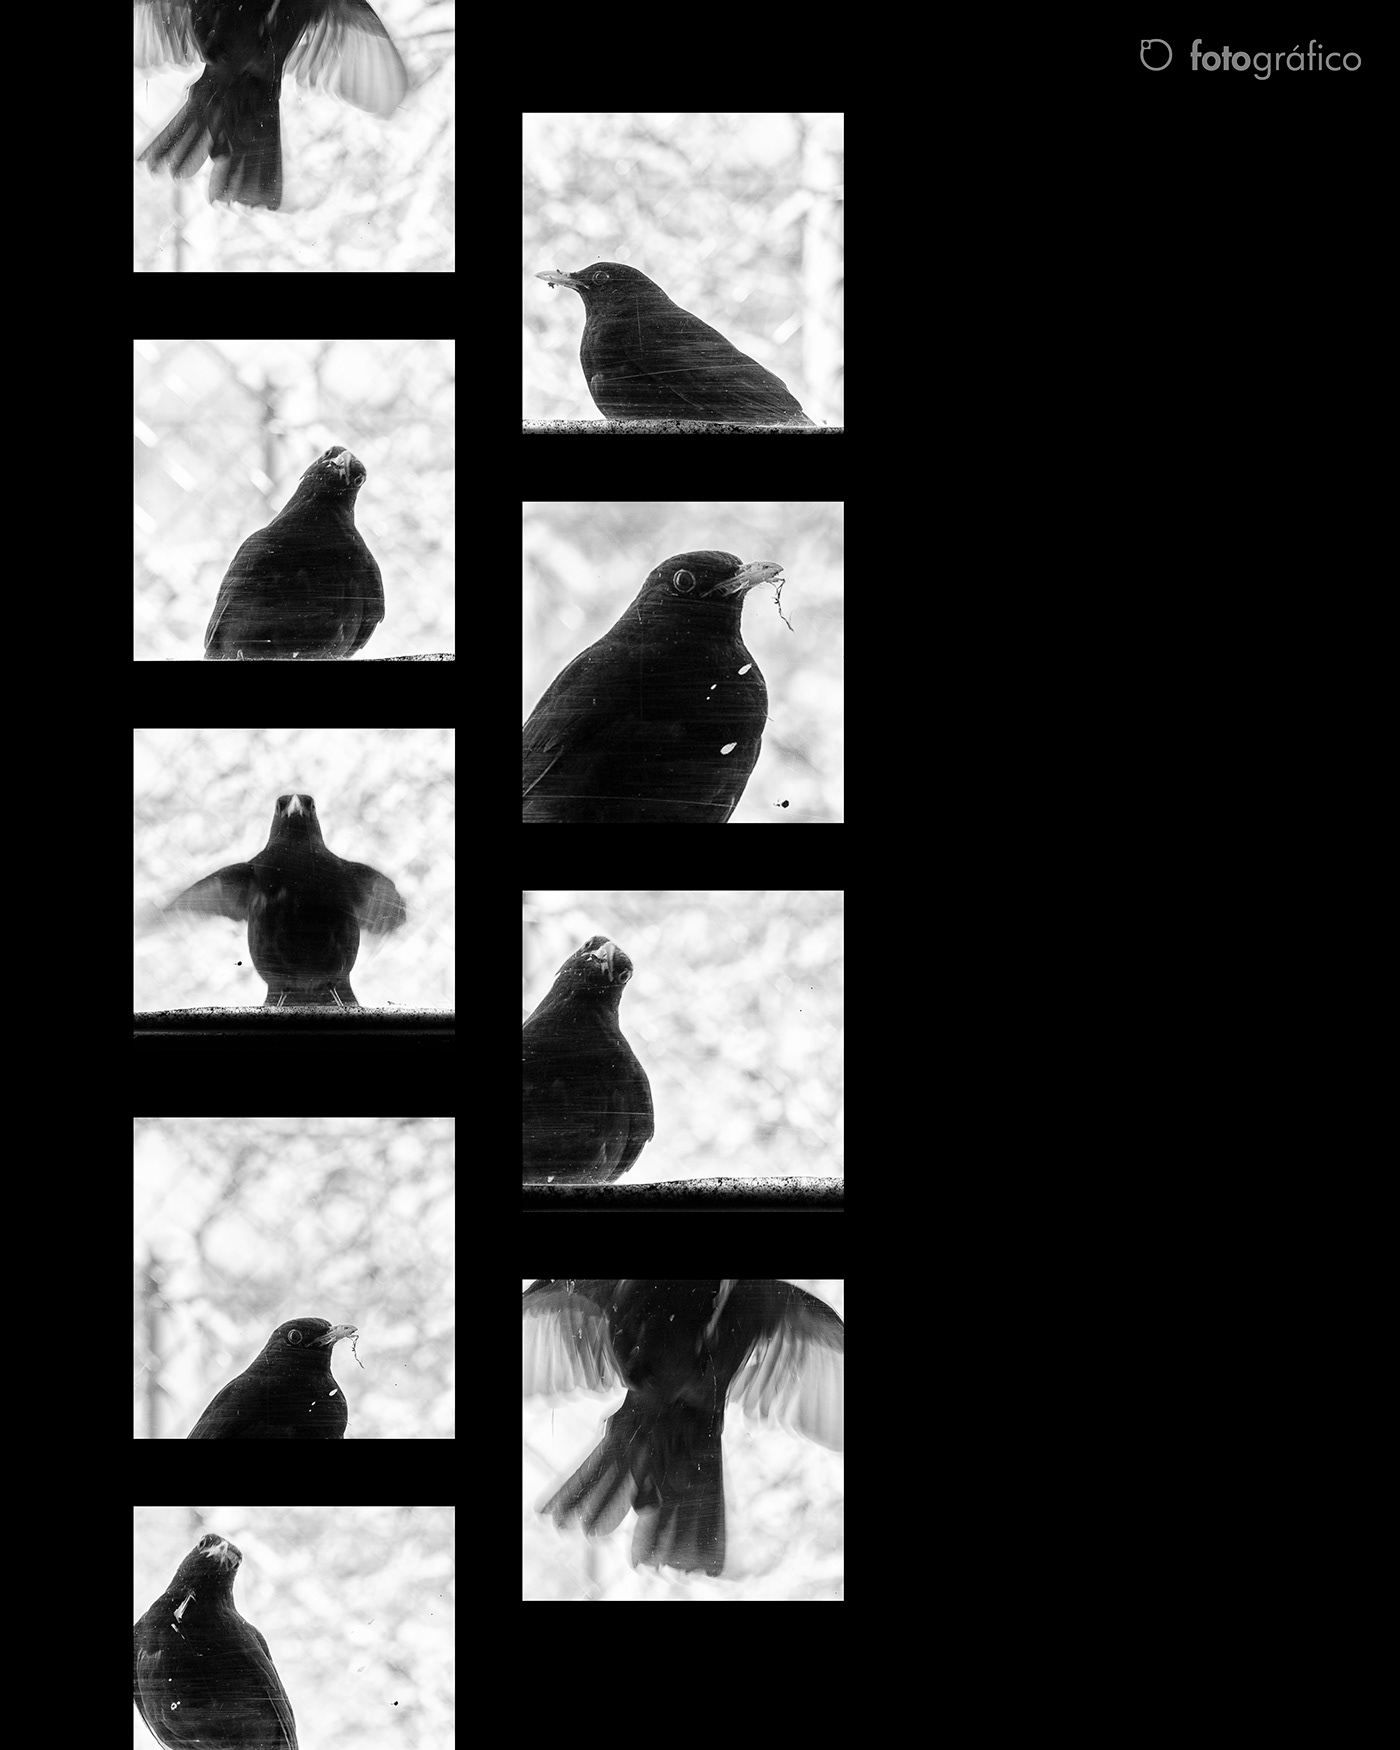 bird Nature Photography  street photography black and white photographer beauty Fotografia asturias spain